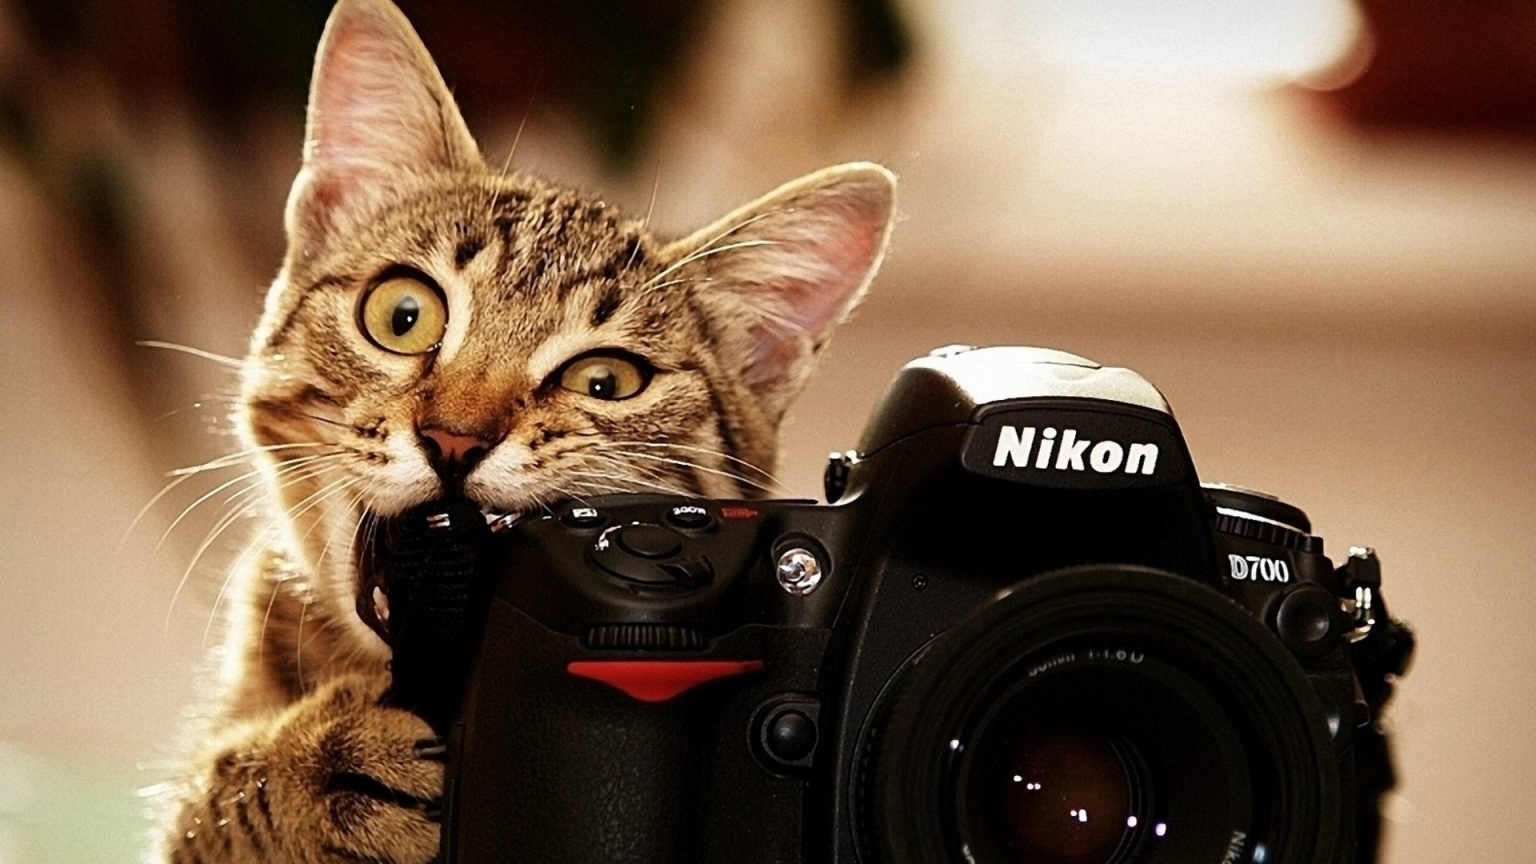 Nikon Cat for 1536 x 864 HDTV resolution